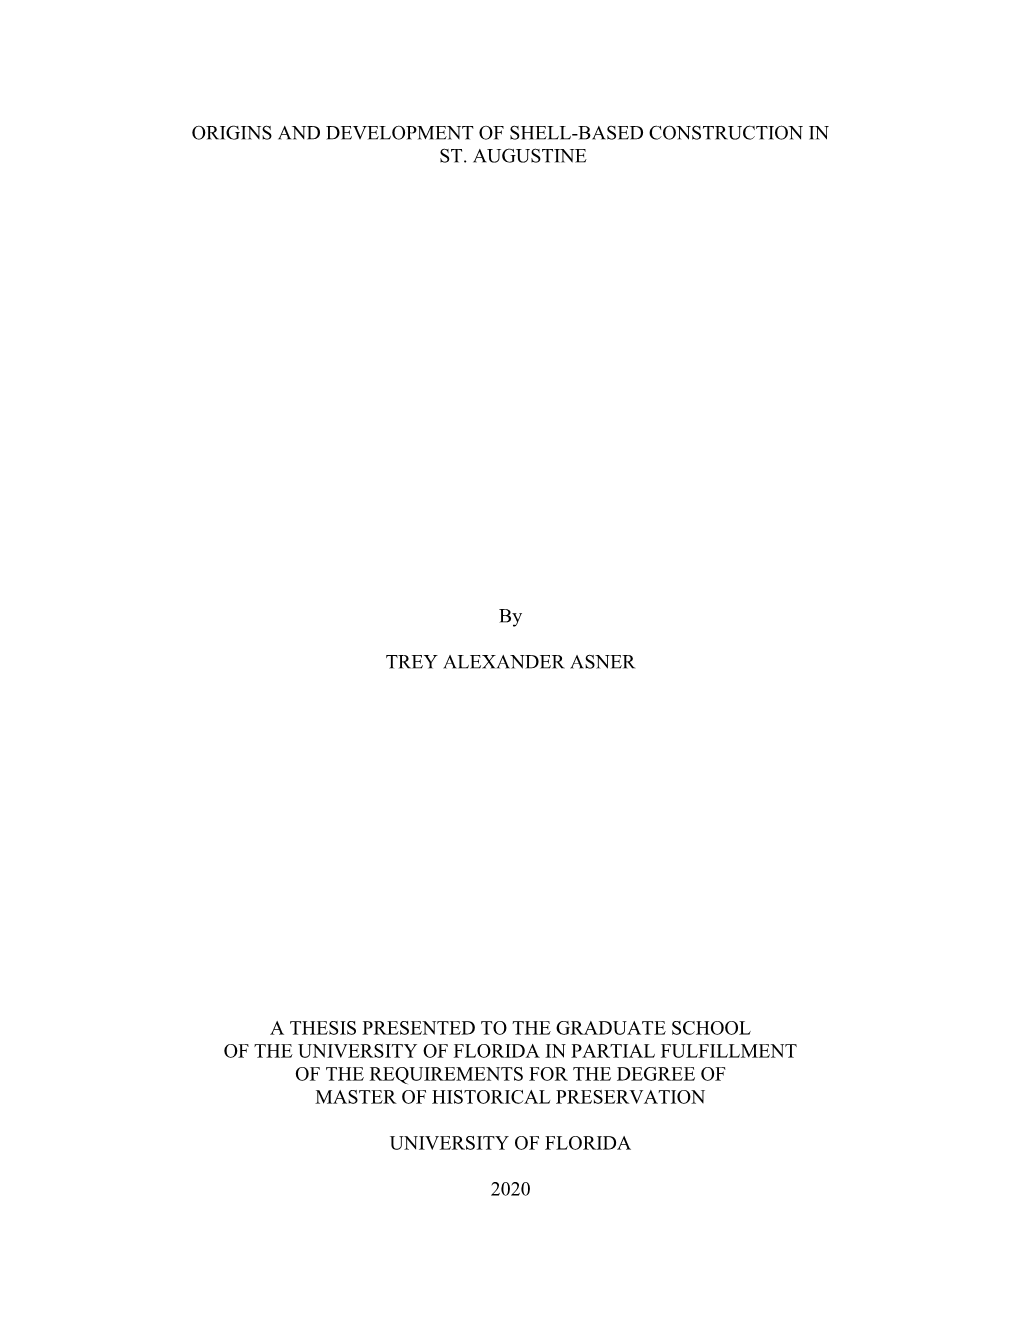 university of florida dissertation template